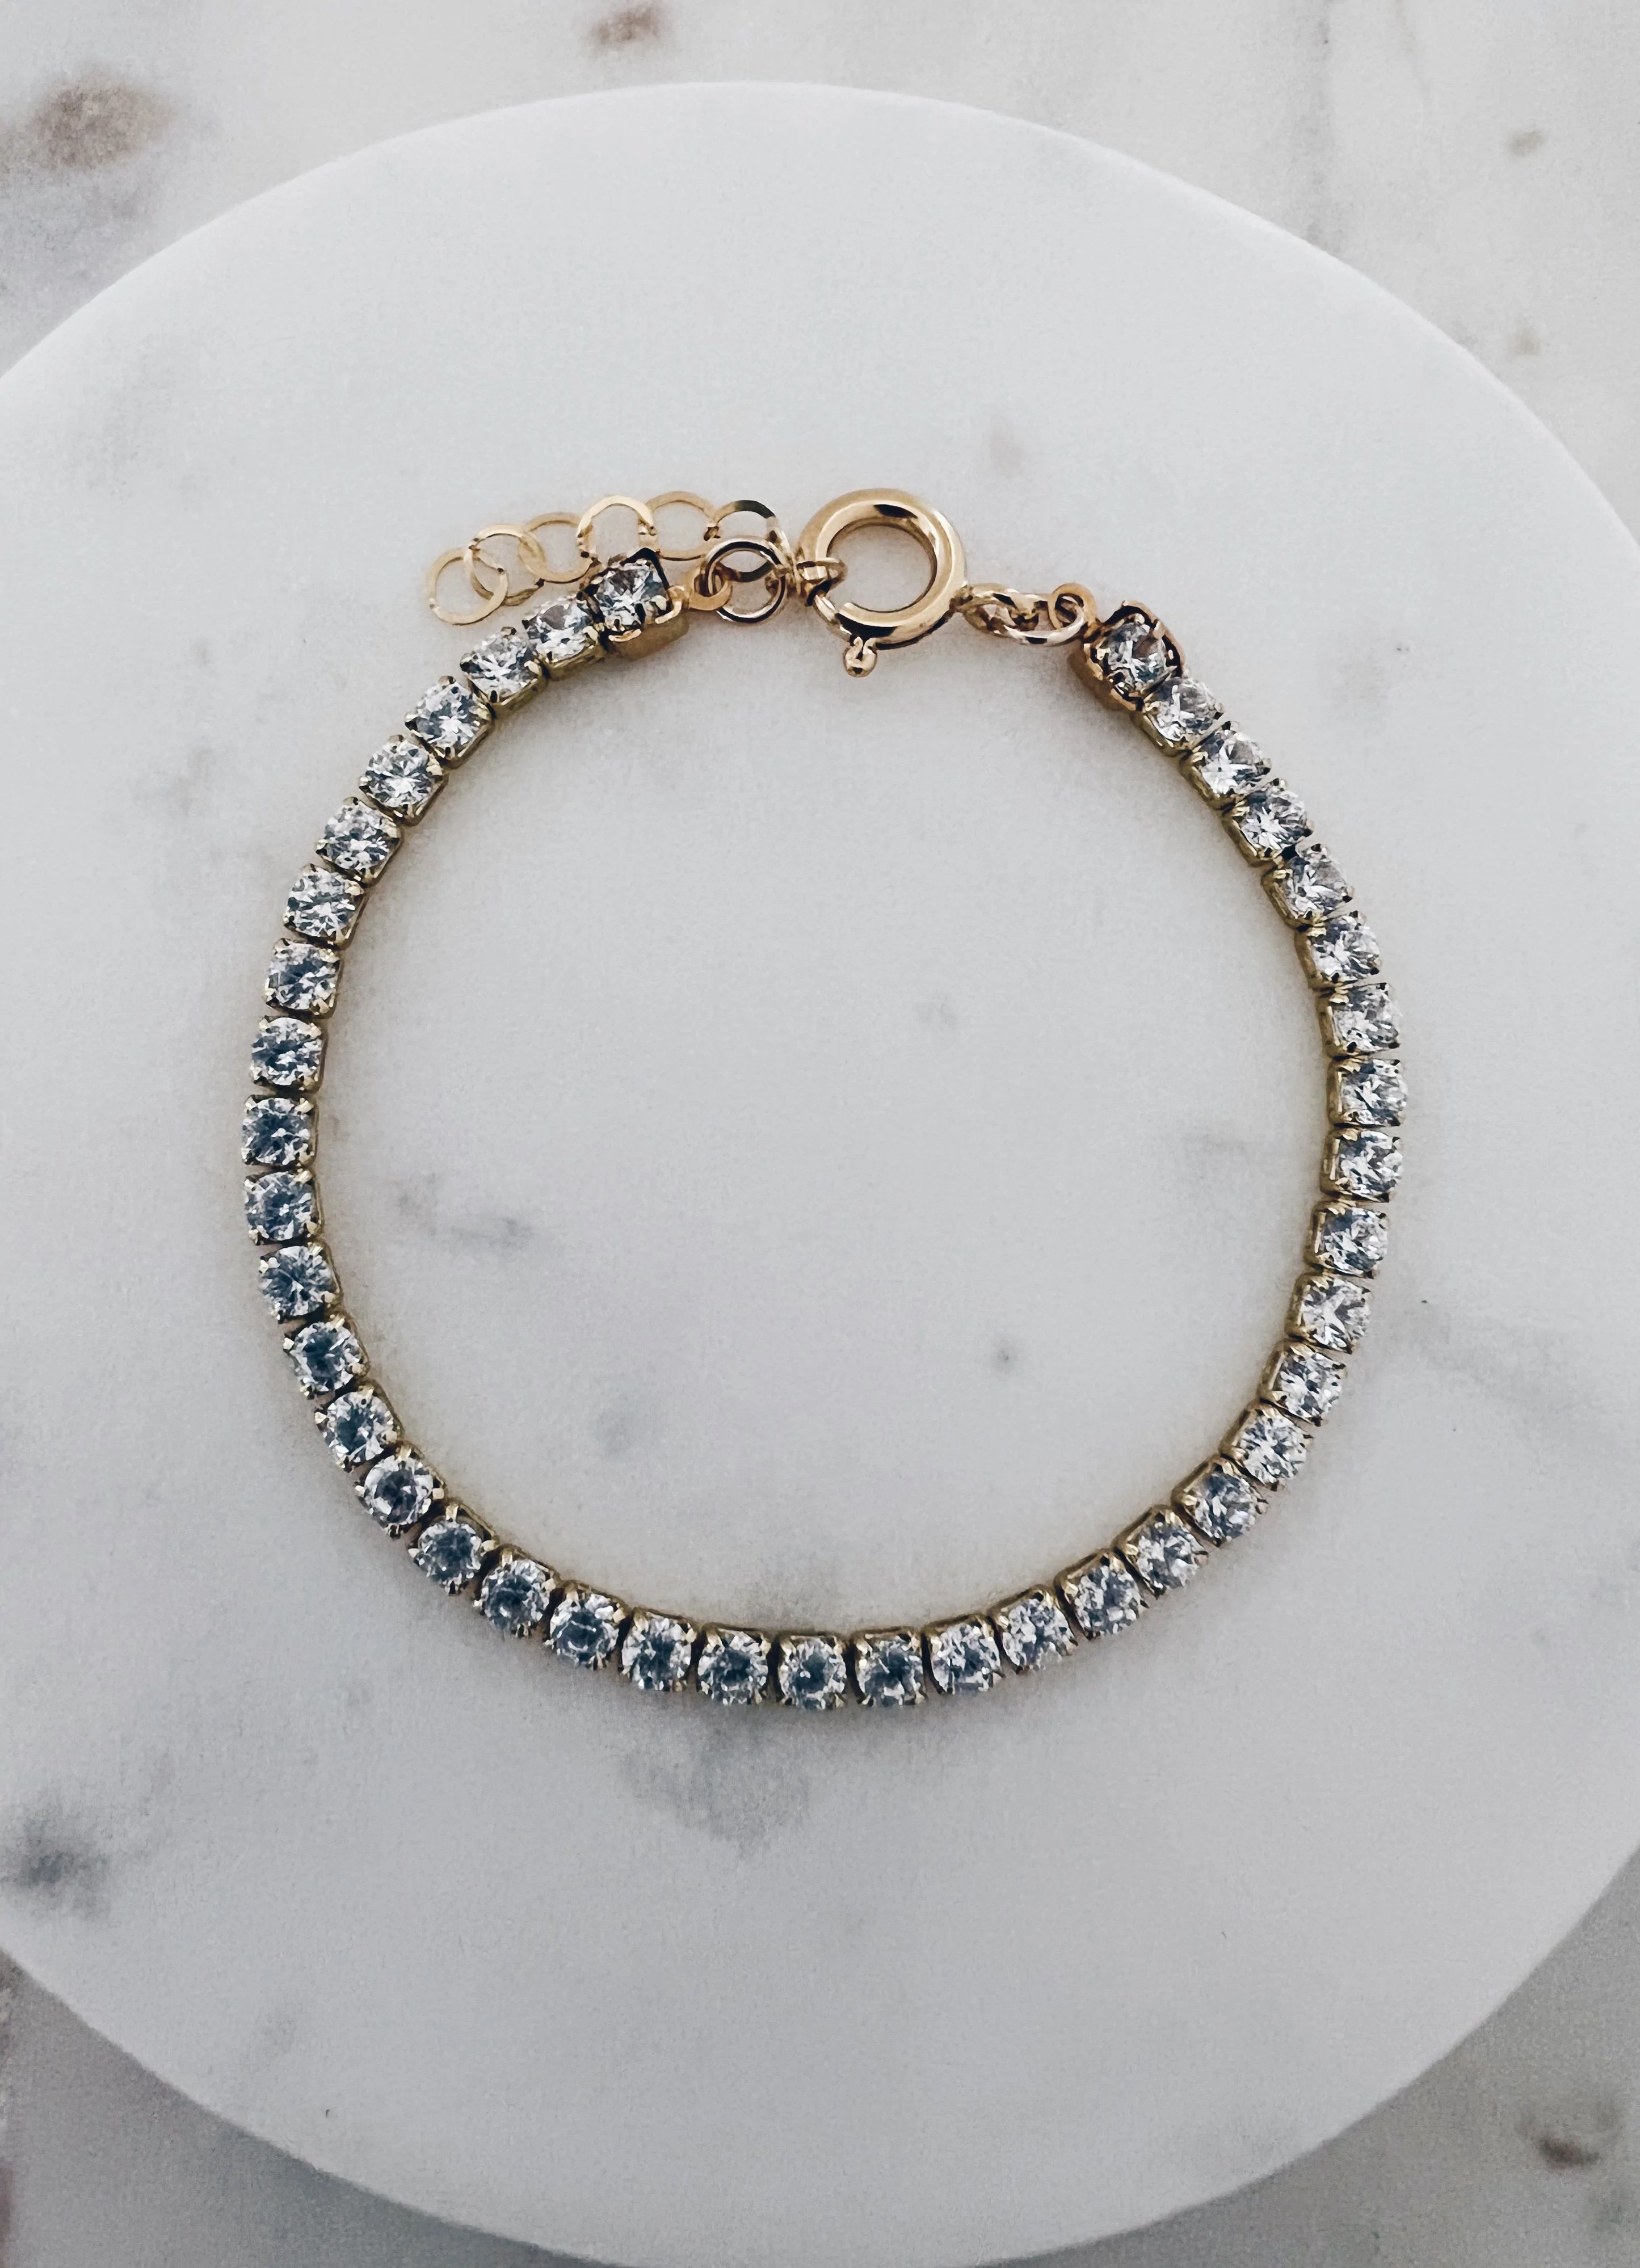 Singles Tennis Bracelet + More Styles | Mac and Ry Jewelry